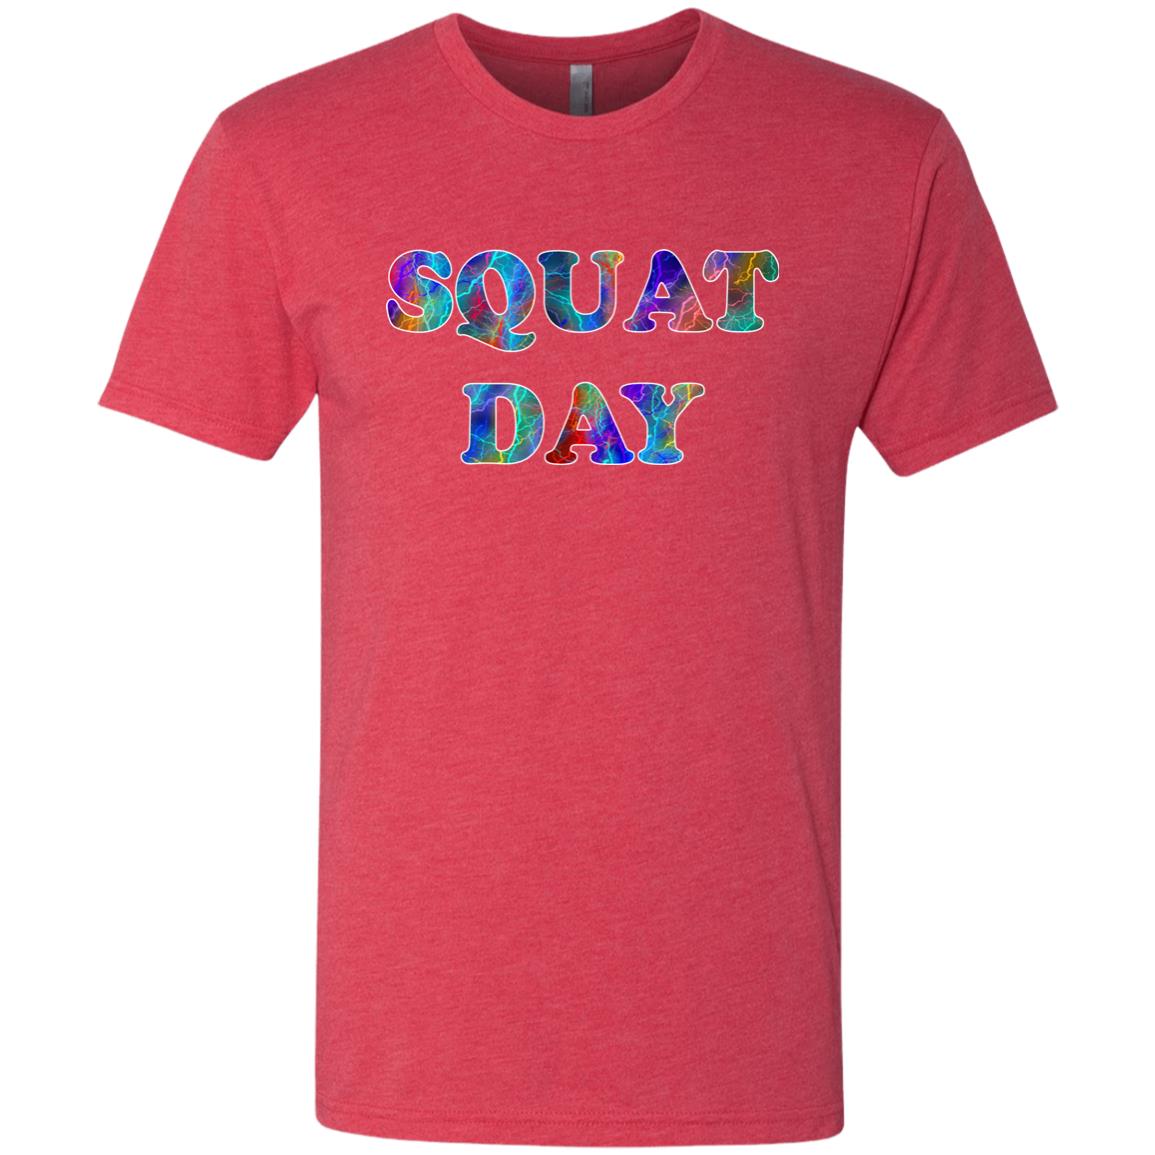 Squat Day Sport T-Shirt